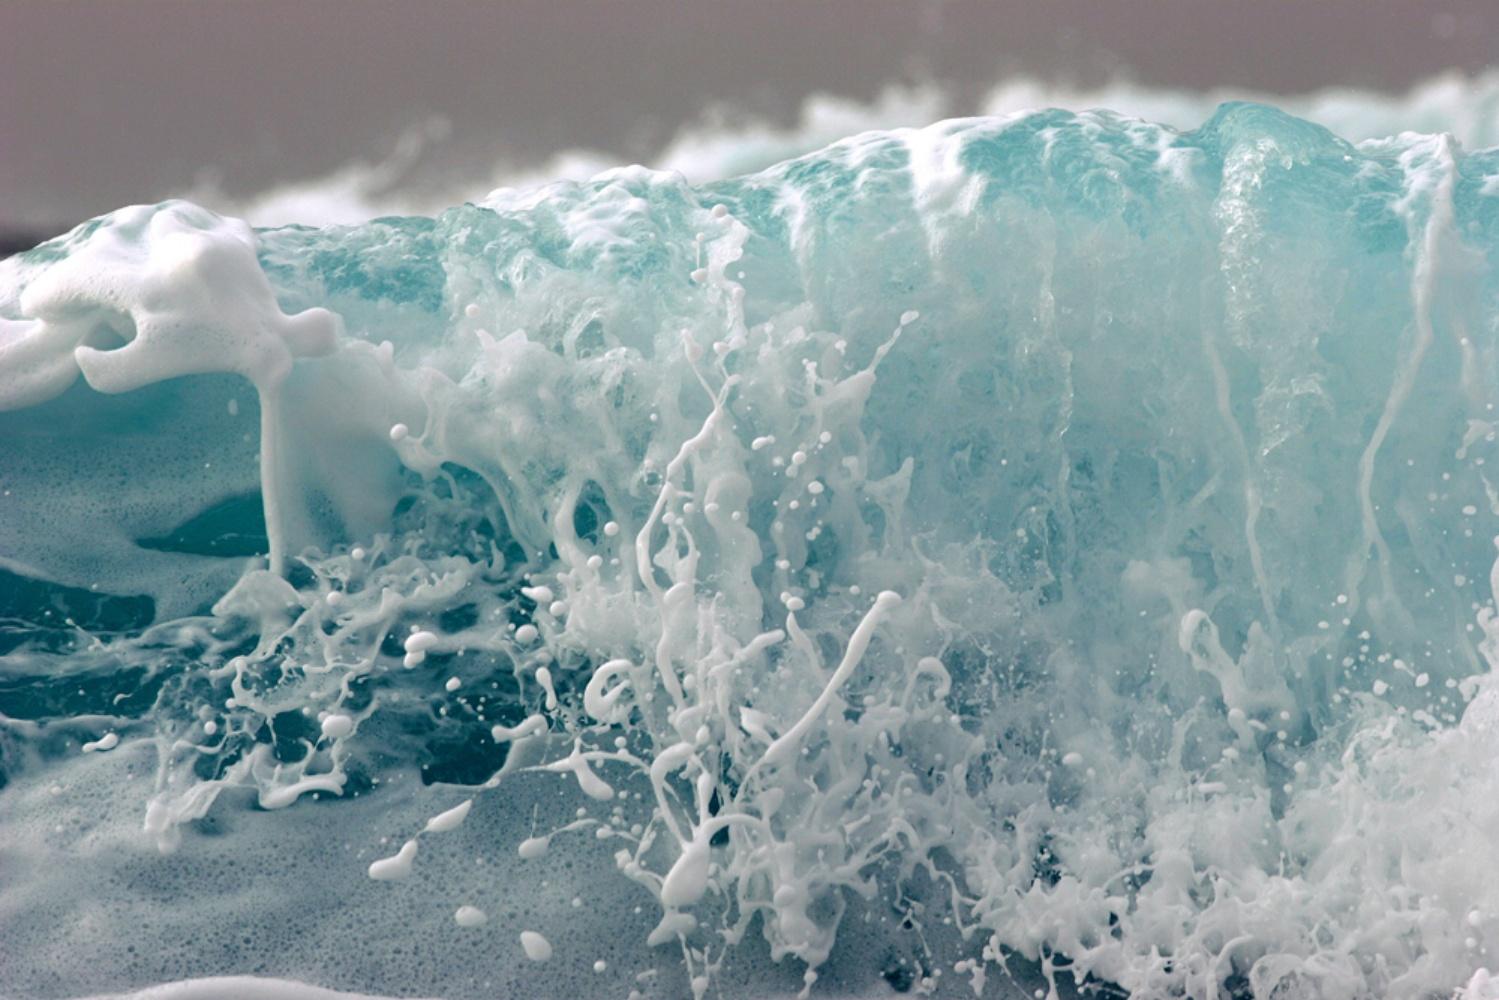 NAMI_099 – Syoin Kajii, Japanese Photography, Ocean, Waves, Water, Nature, Art